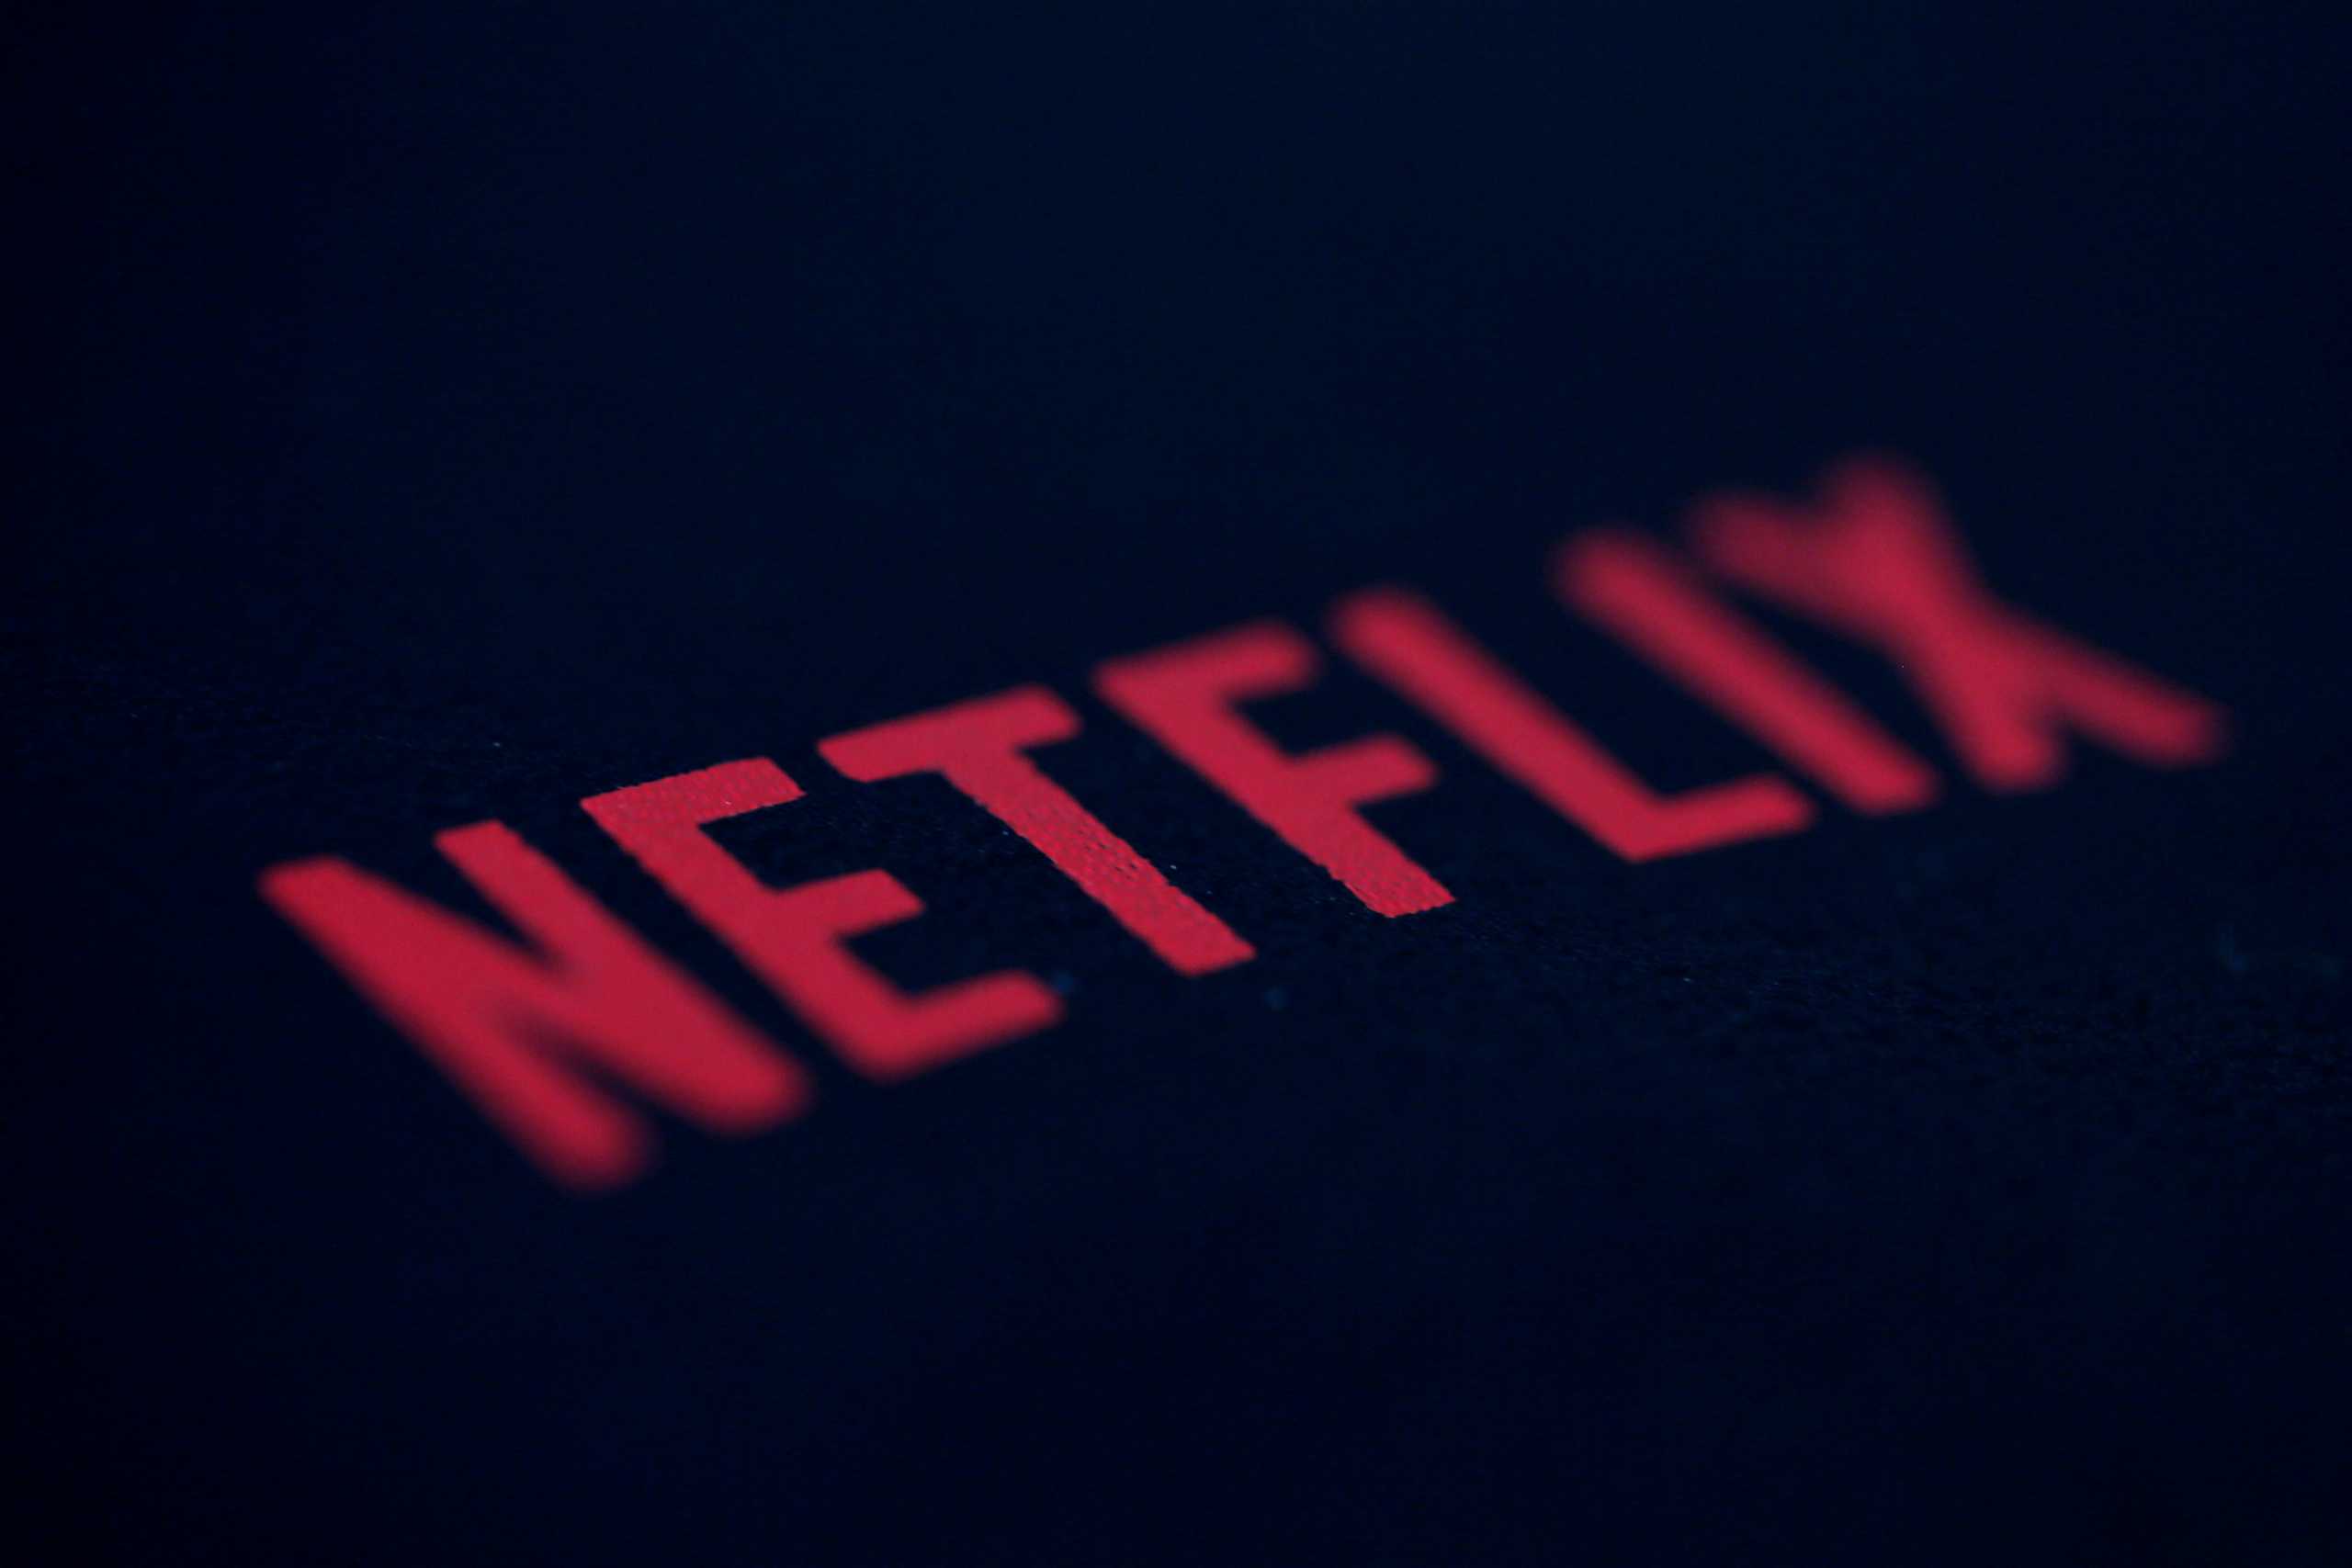 Netflix – The Chosen One: Νεκροί δύο ηθοποιοί σε δυστύχημα στα γυρίσματα